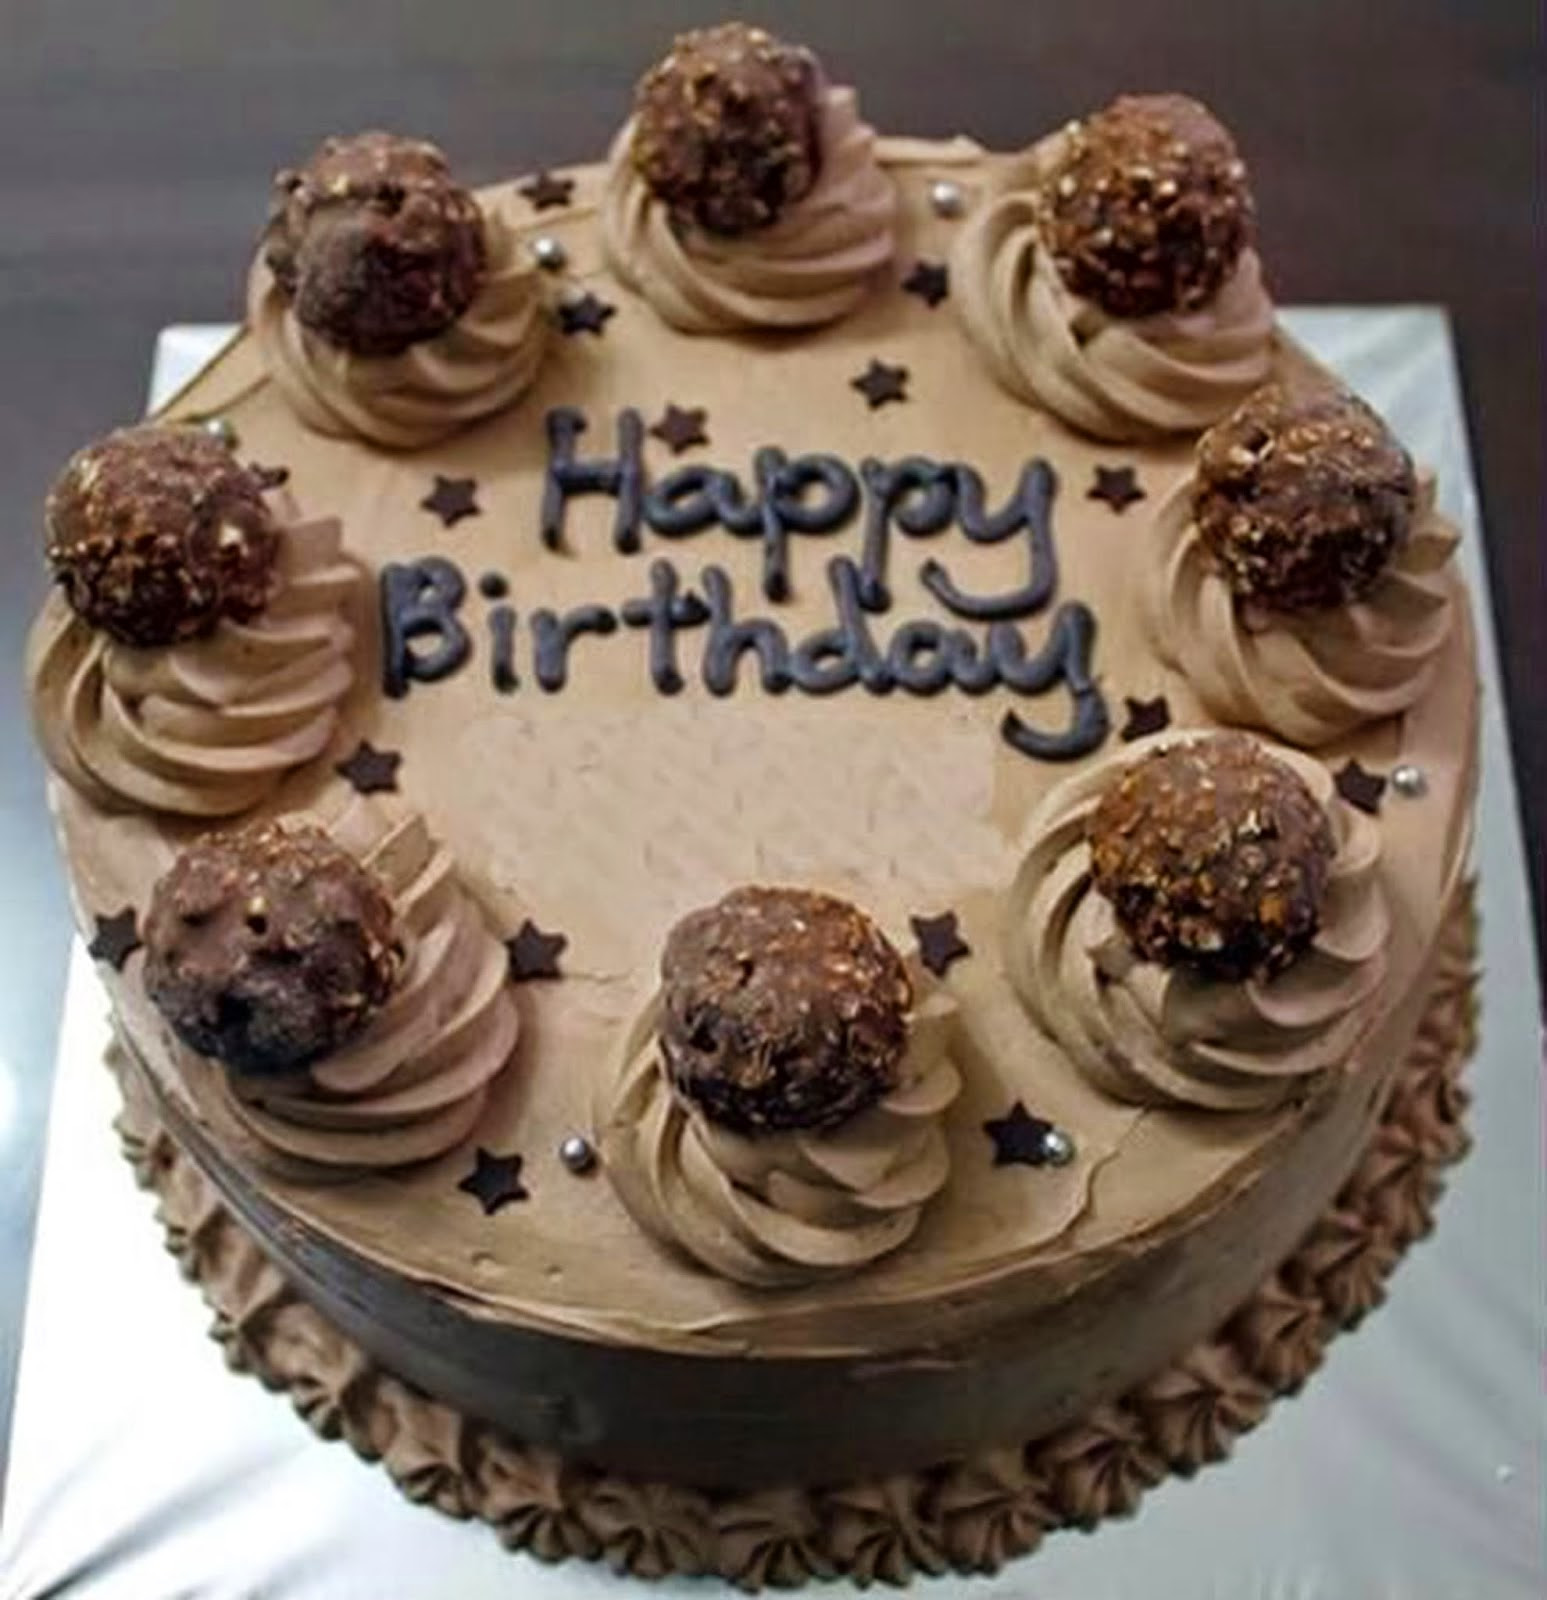 15 Happy Birthday Chocolate Cake
 Anyone Can Make